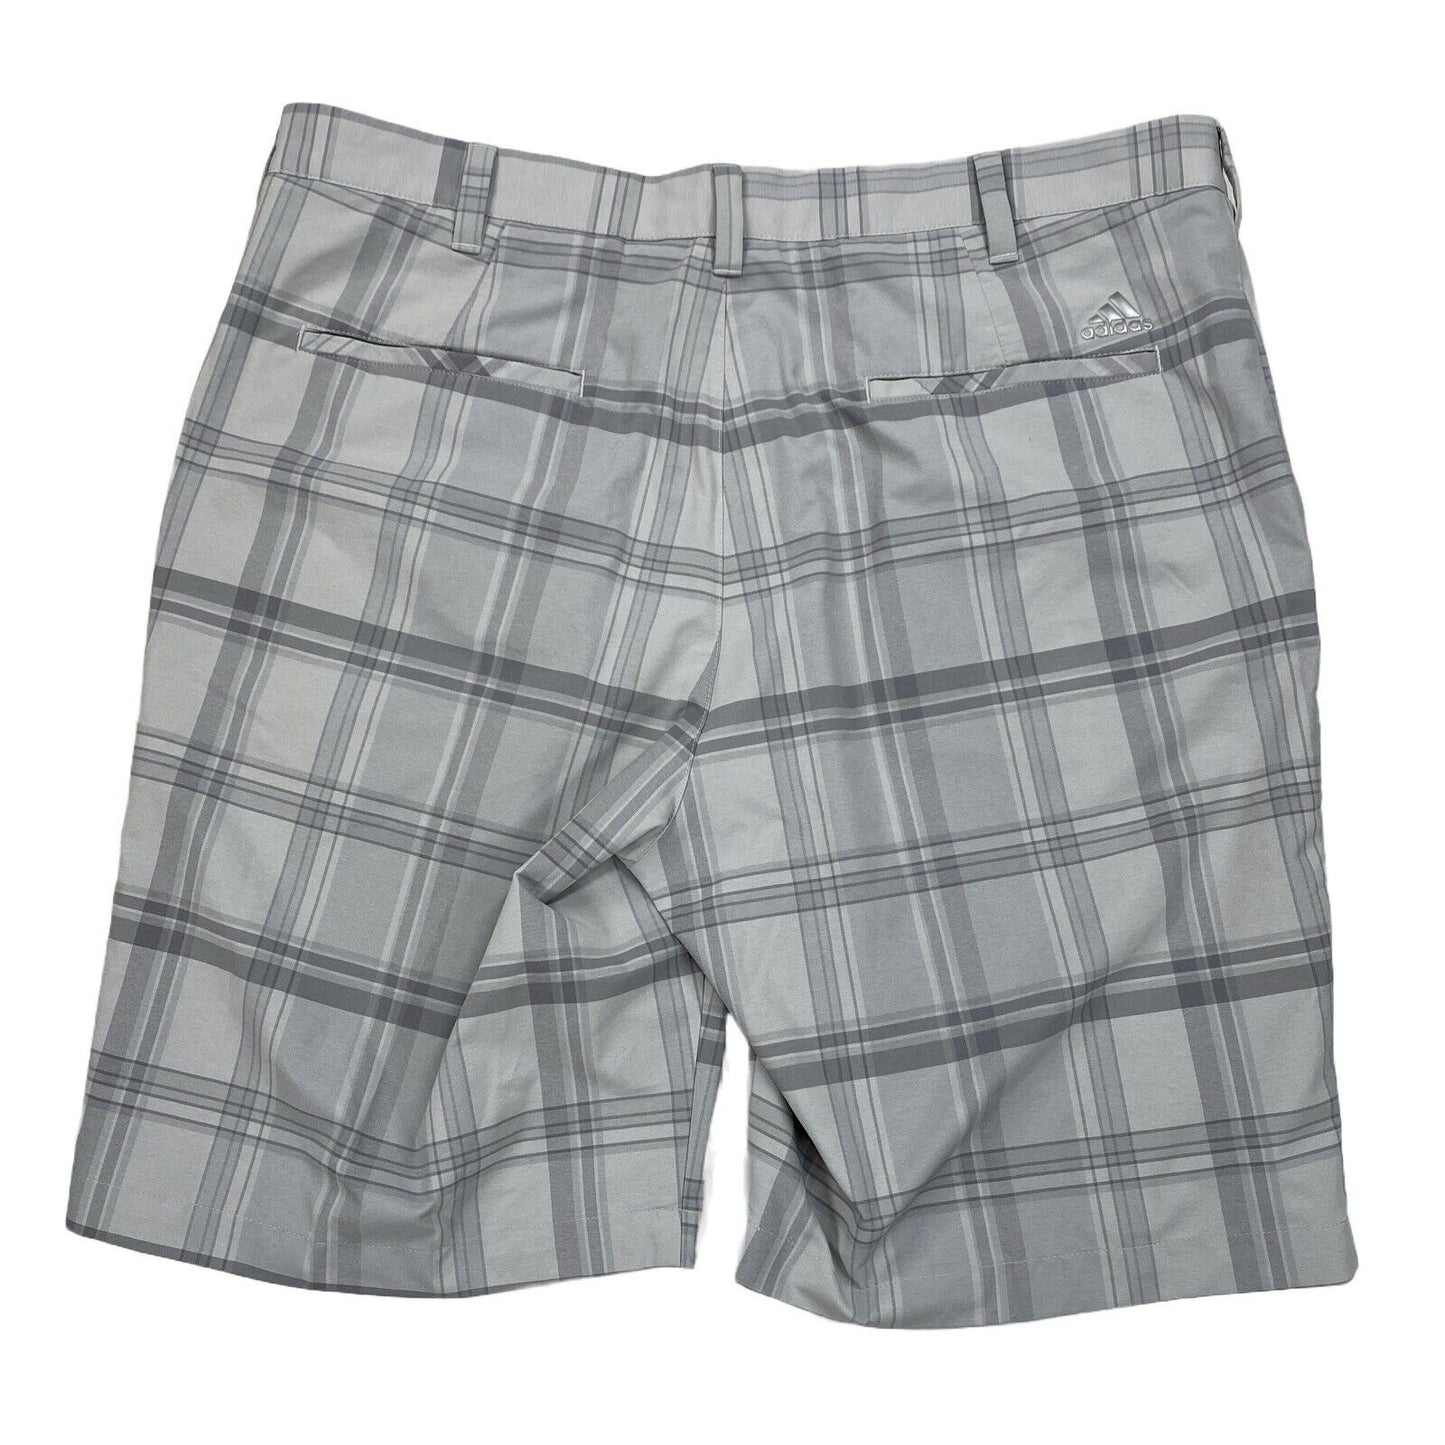 adidas Men's Gray Plaid Polyester Golf Shorts - 36